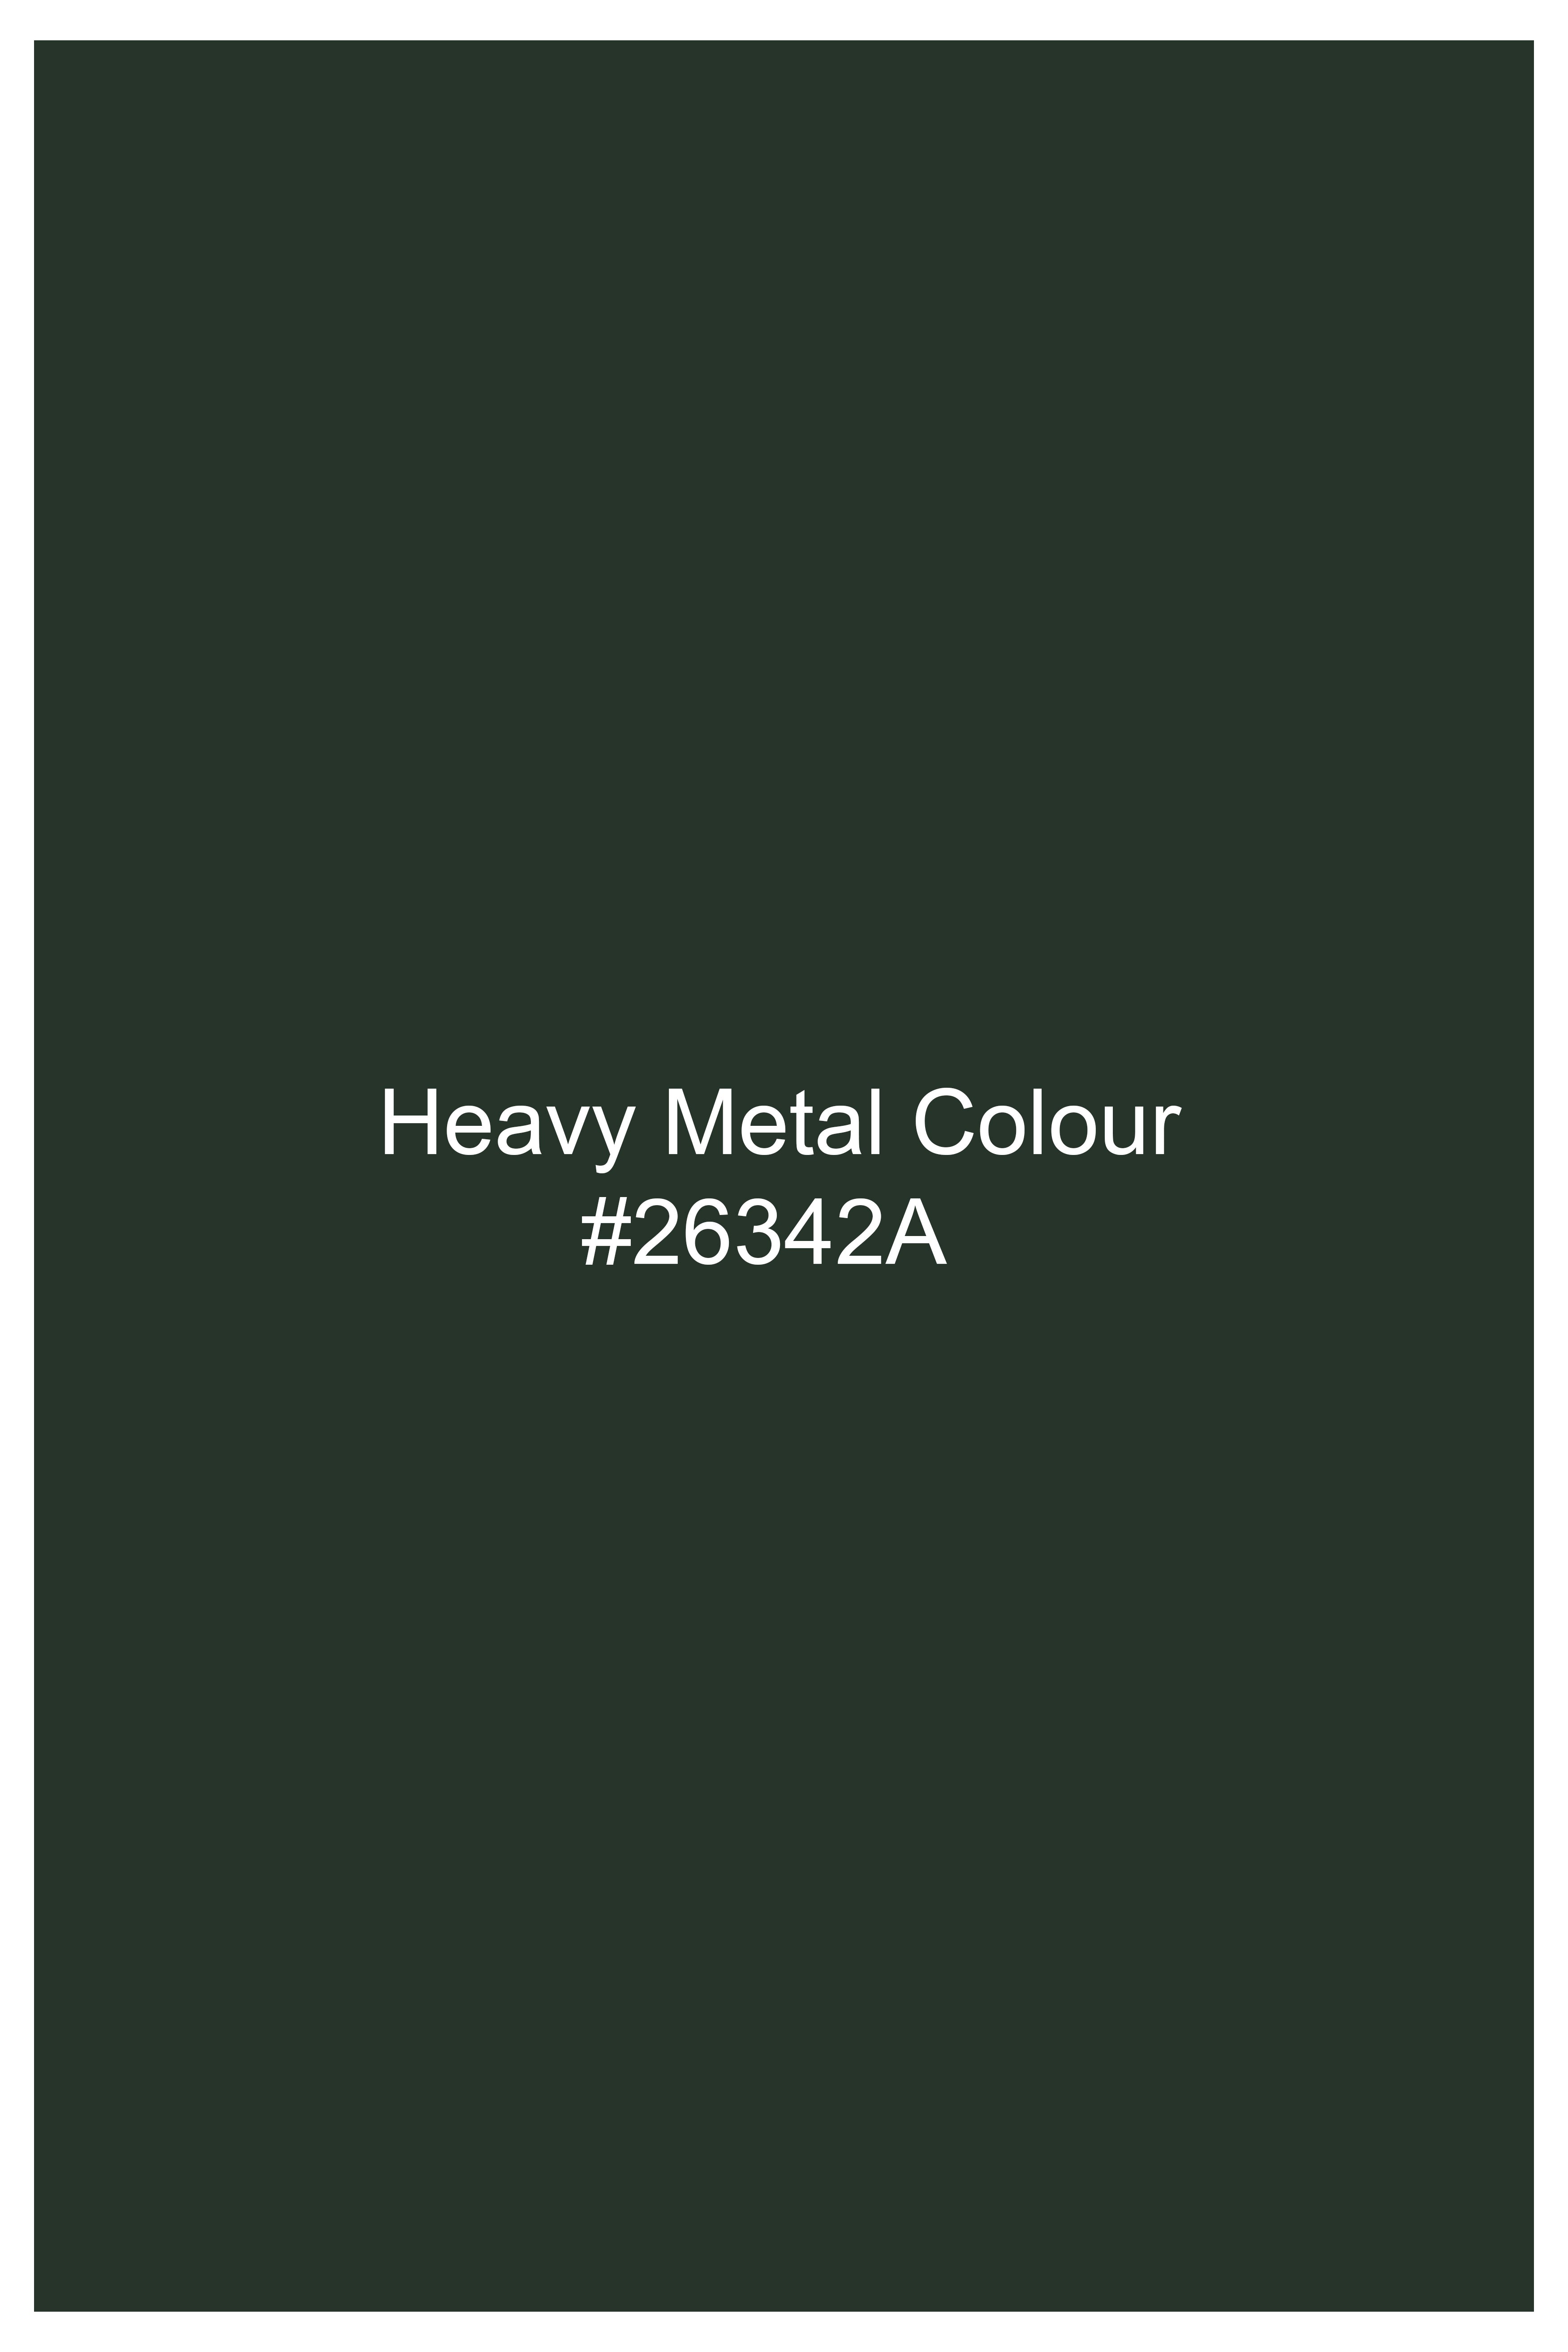 Heavy Metal Green Premium Cotton Bandhgala Stretchable traveler Suit ST2776-BG-36, ST2776-BG-38, ST2776-BG-40, ST2776-BG-42, ST2776-BG-44, ST2776-BG-46, ST2776-BG-48, ST2776-BG-50, ST2776-BG-52, ST2776-BG-54, ST2776-BG-56, ST2776-BG-58, ST2776-BG-60